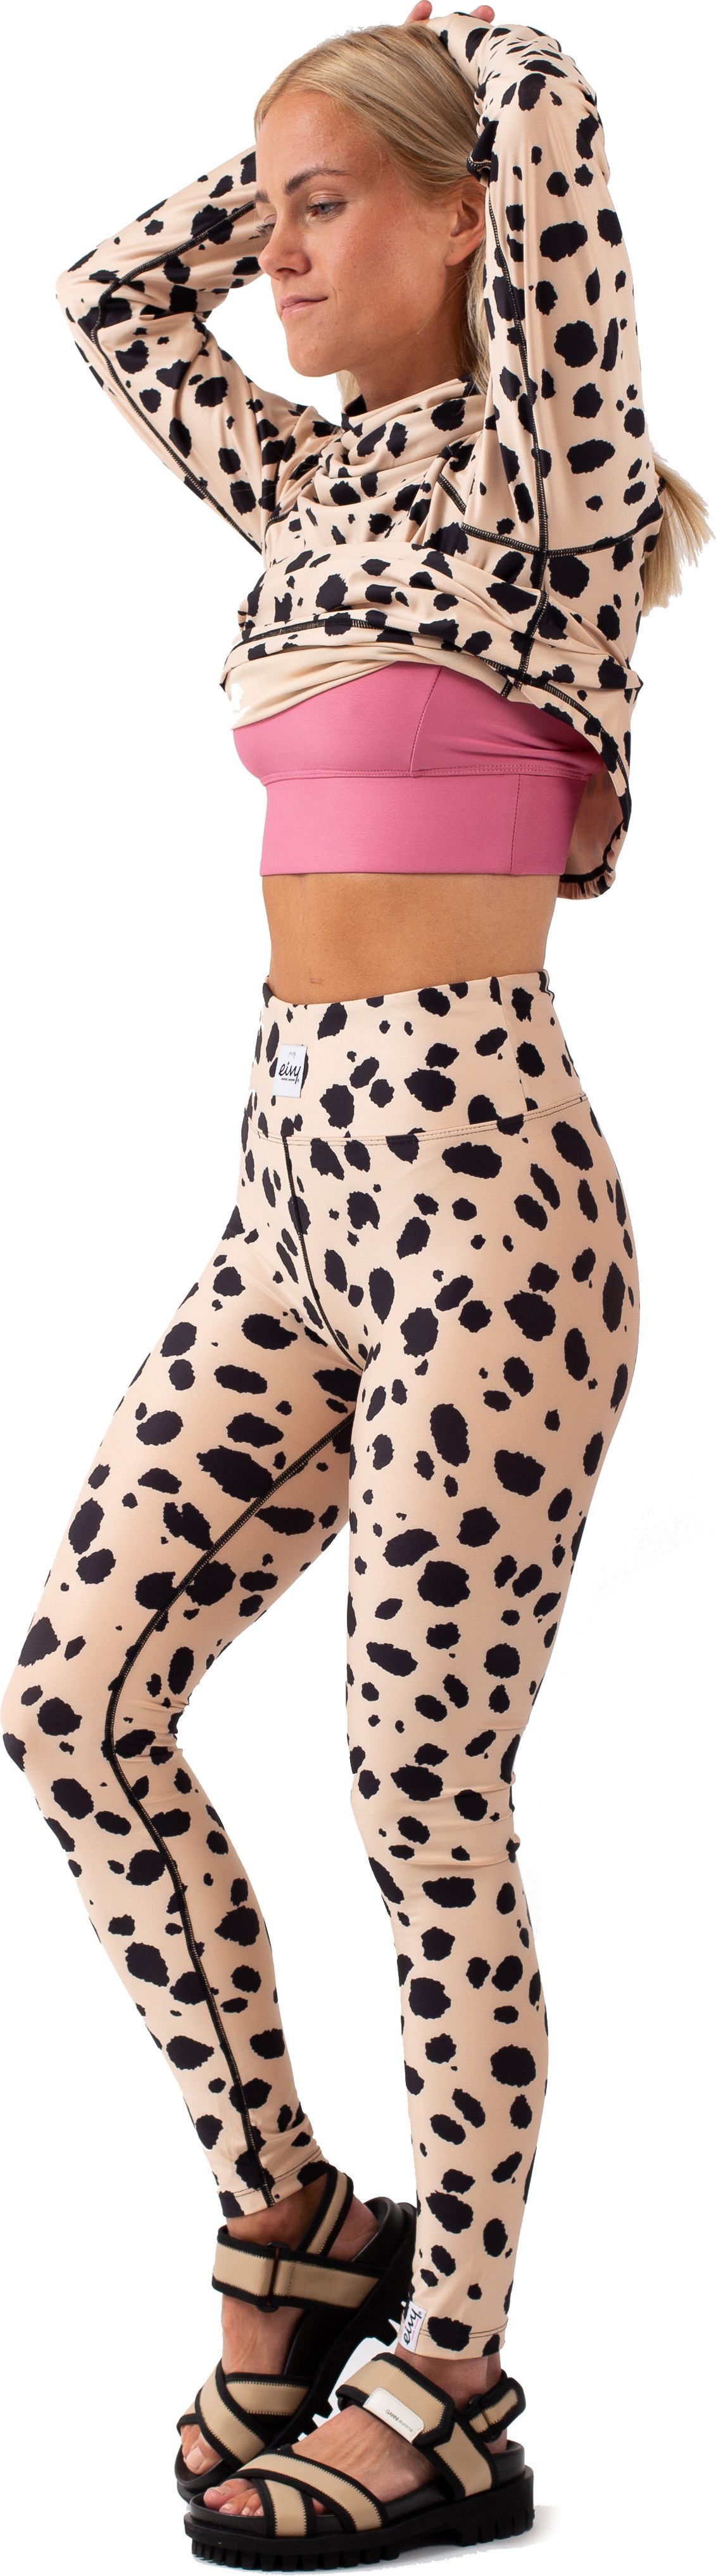 https://www.fjellsport.no/assets/blobs/eivy-women-s-icecold-tights-cheetah-7e2570c595.jpeg?preset=medium&dpr=2